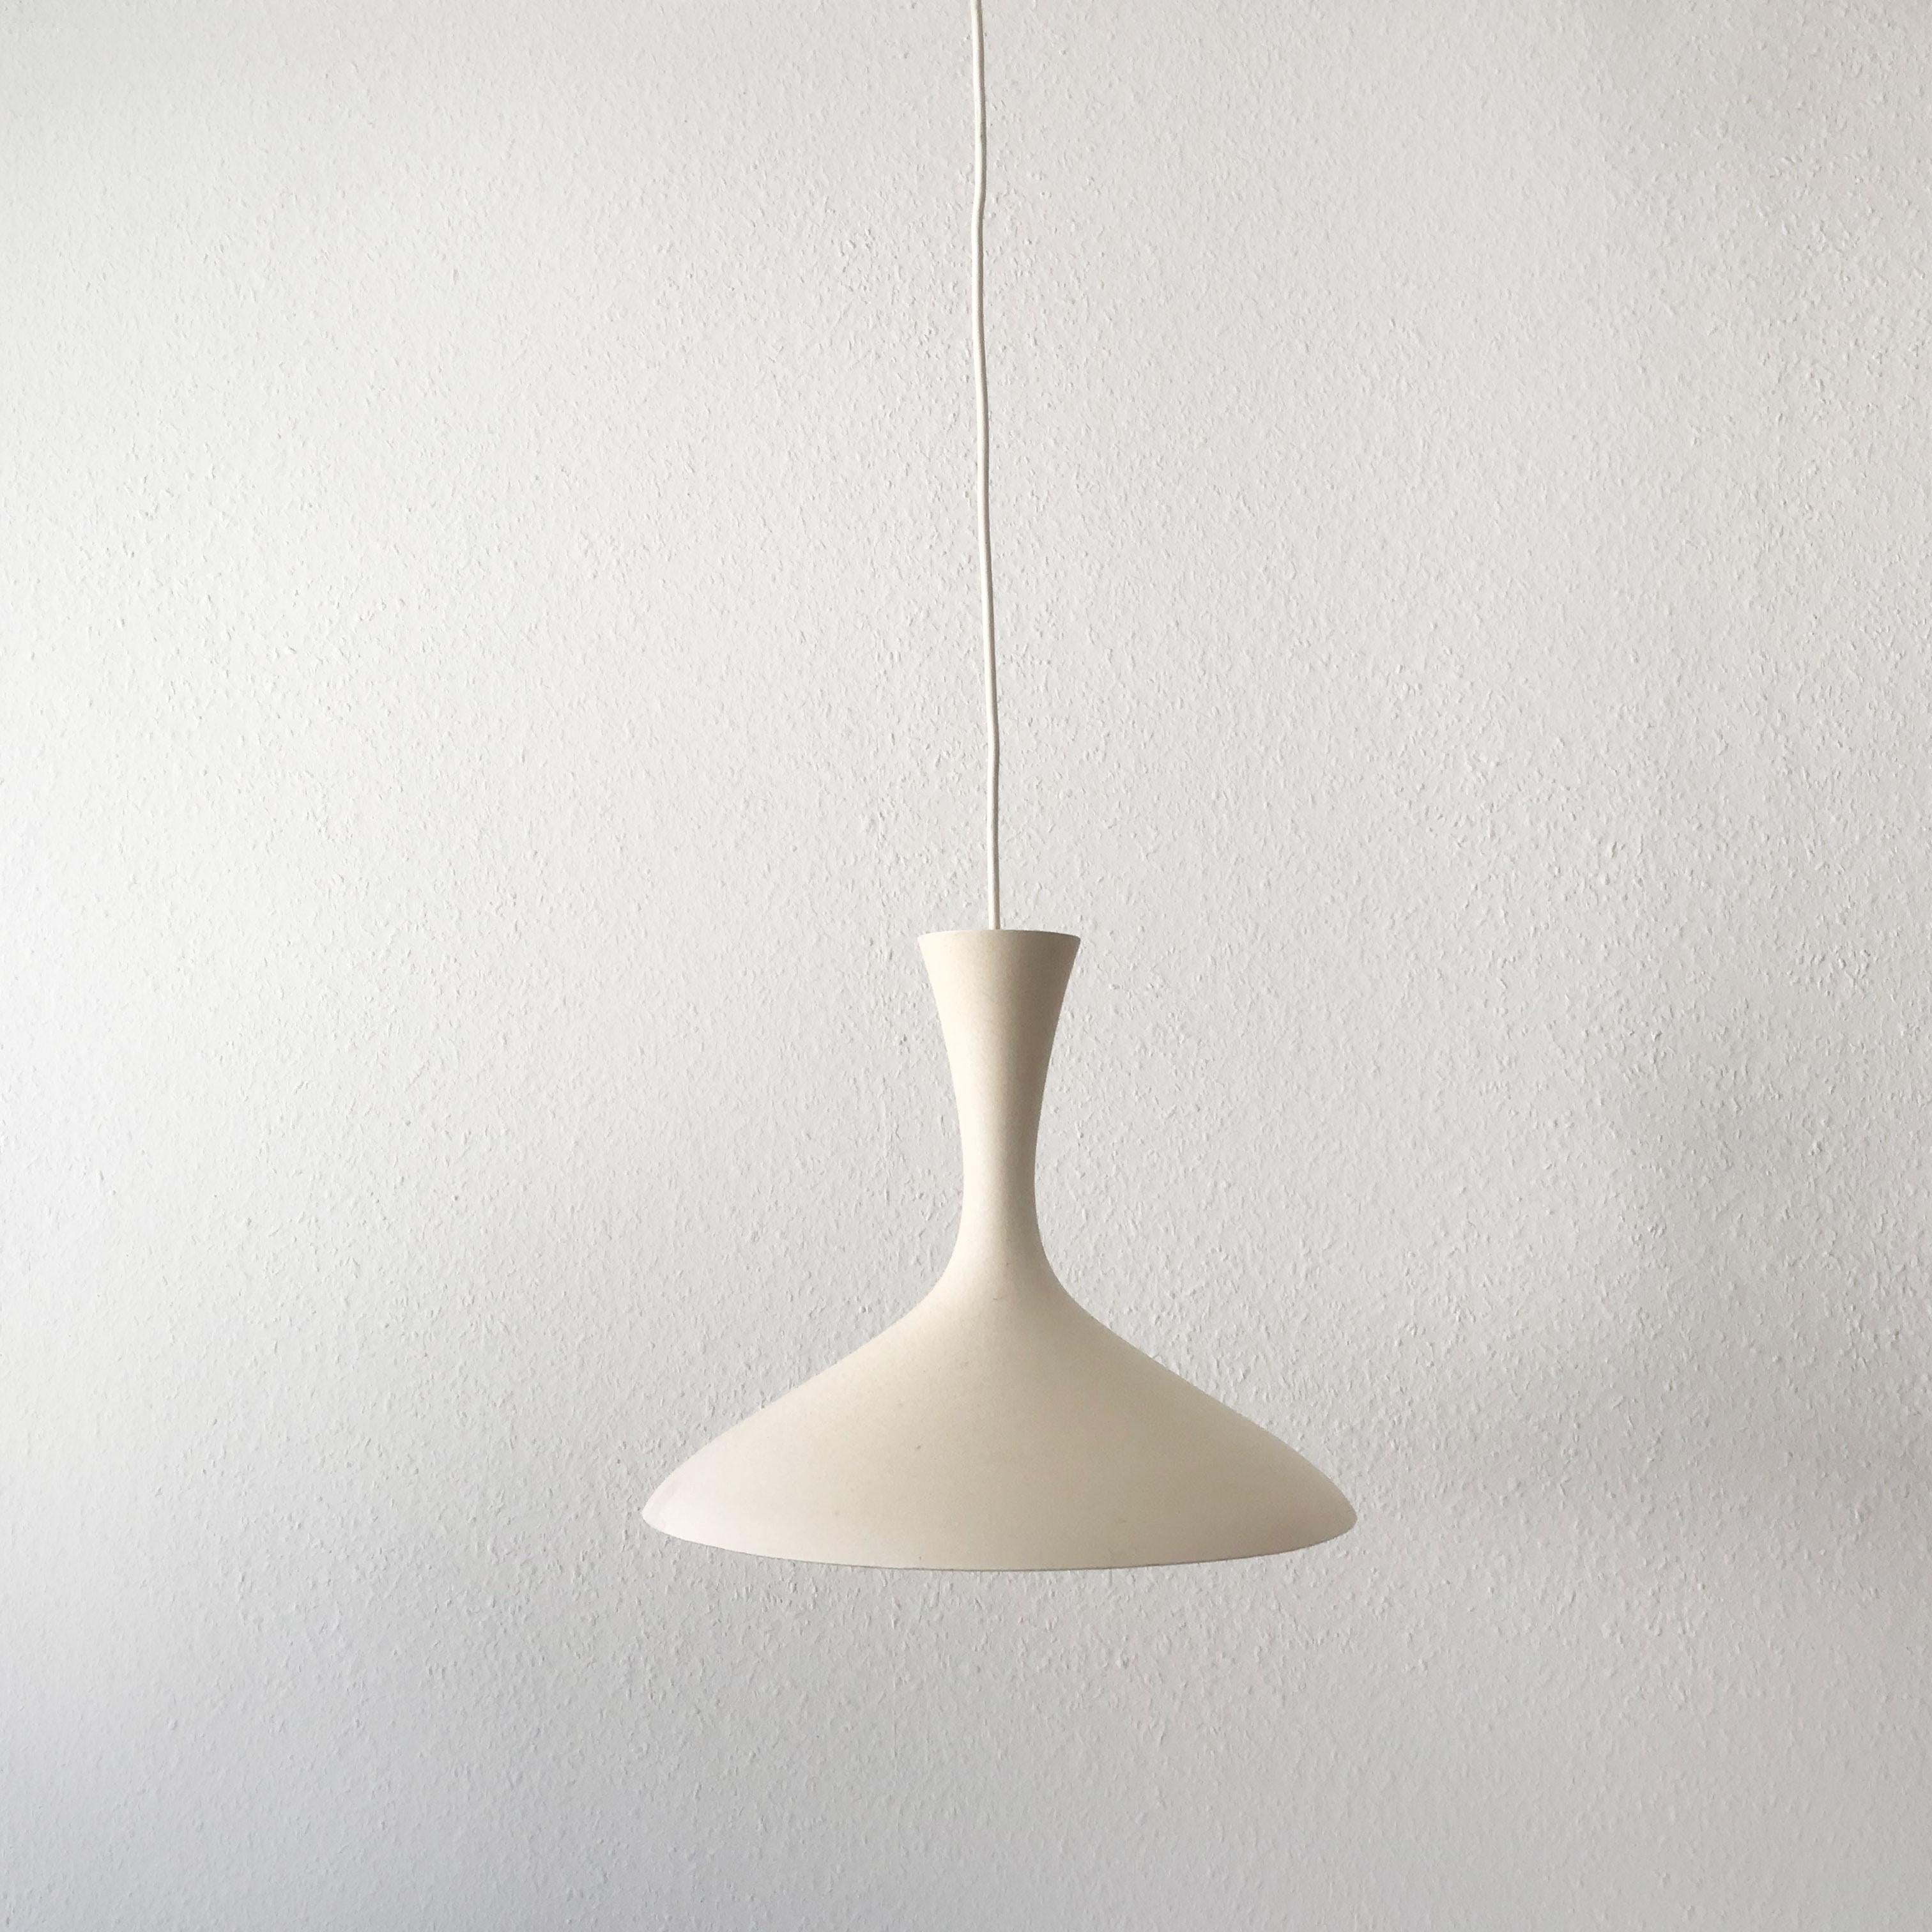 Rare and Elegant Pendant Lamp by Louis Kalff for Gebrüder Cosack, 1950s, Germany 1